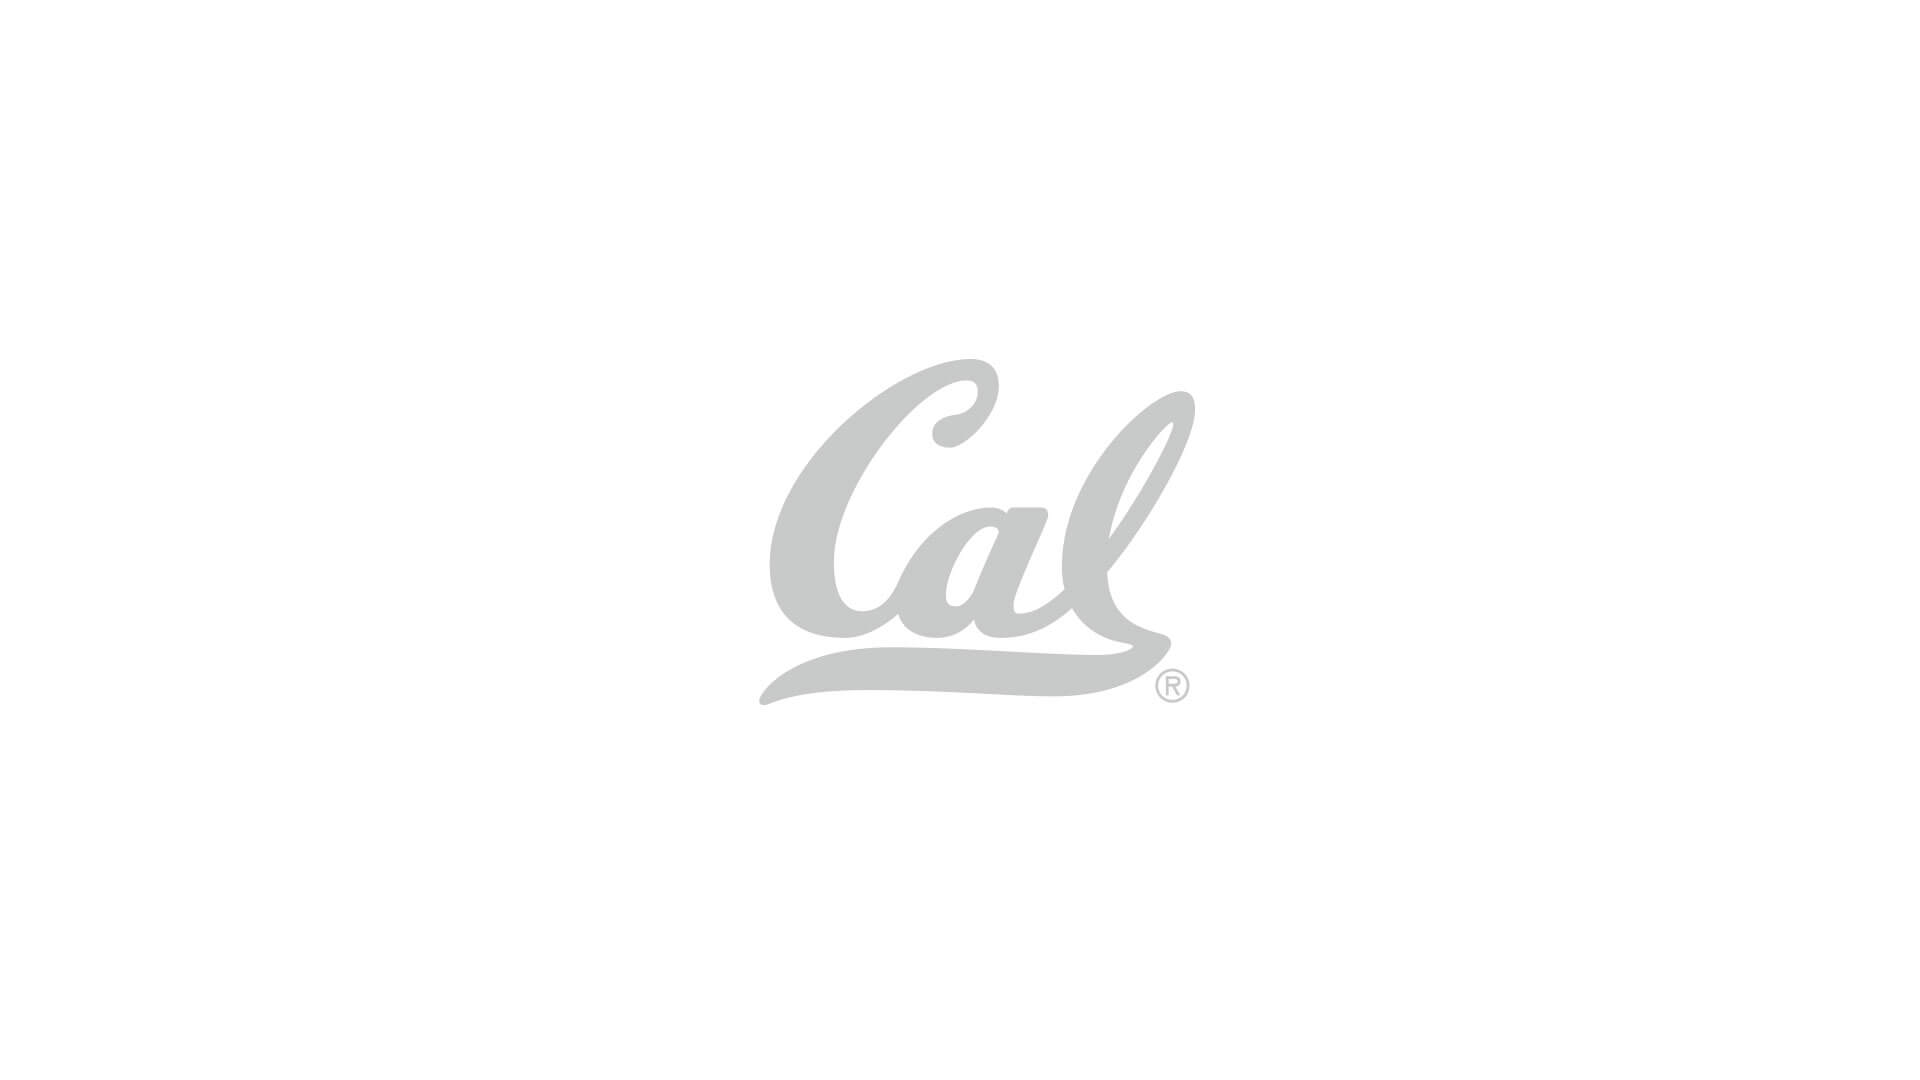 Cal Logo - University of California Golden Bears Athletics - Official Athletics ...